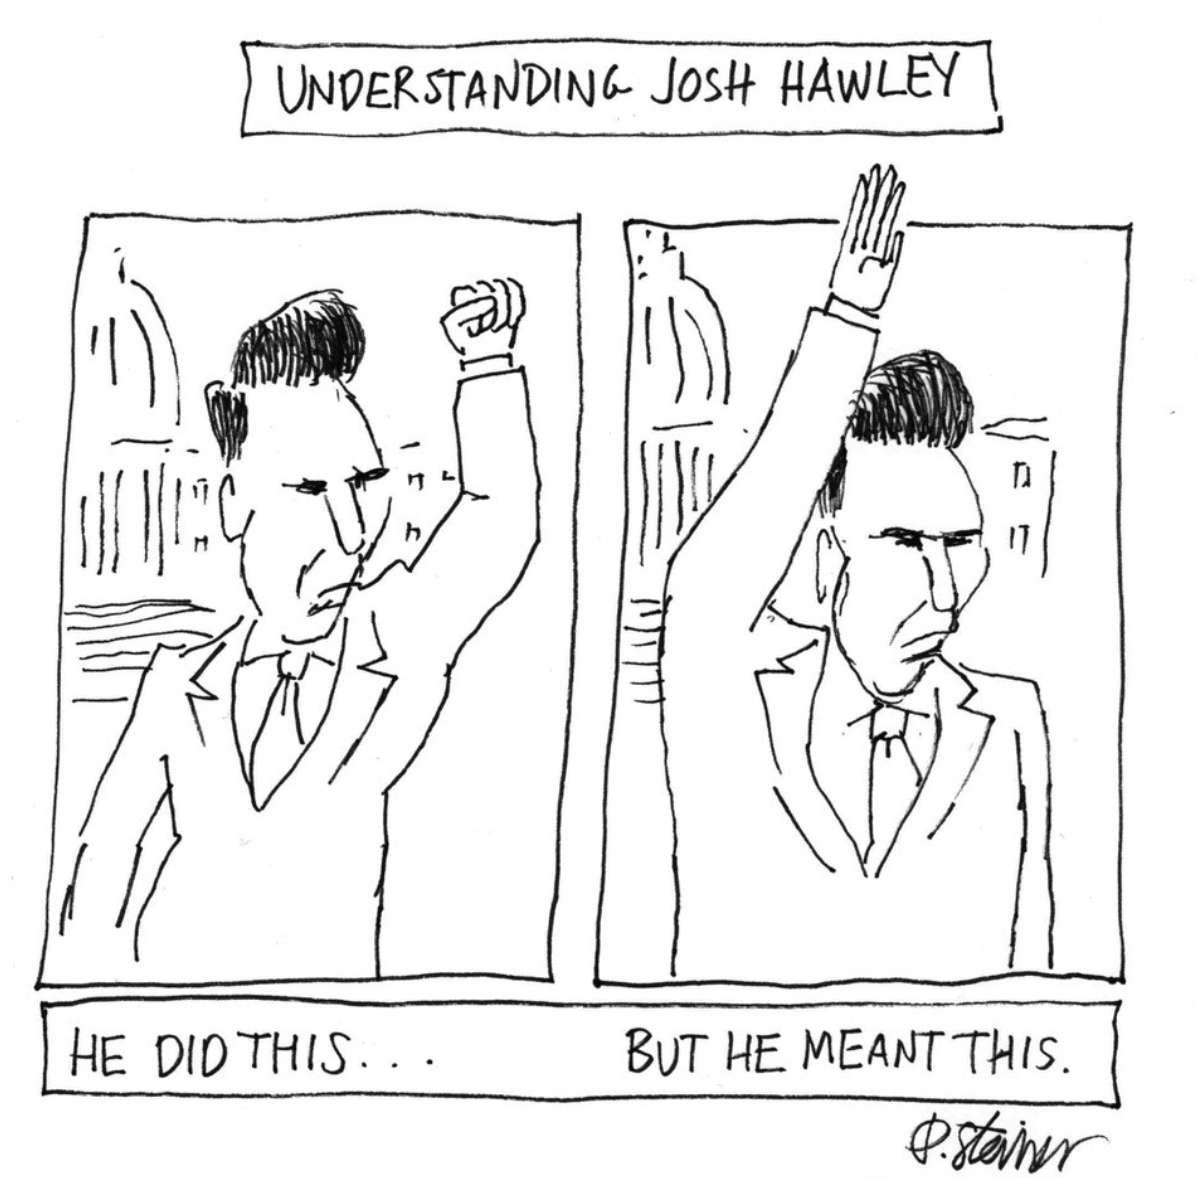 josh hawley explained